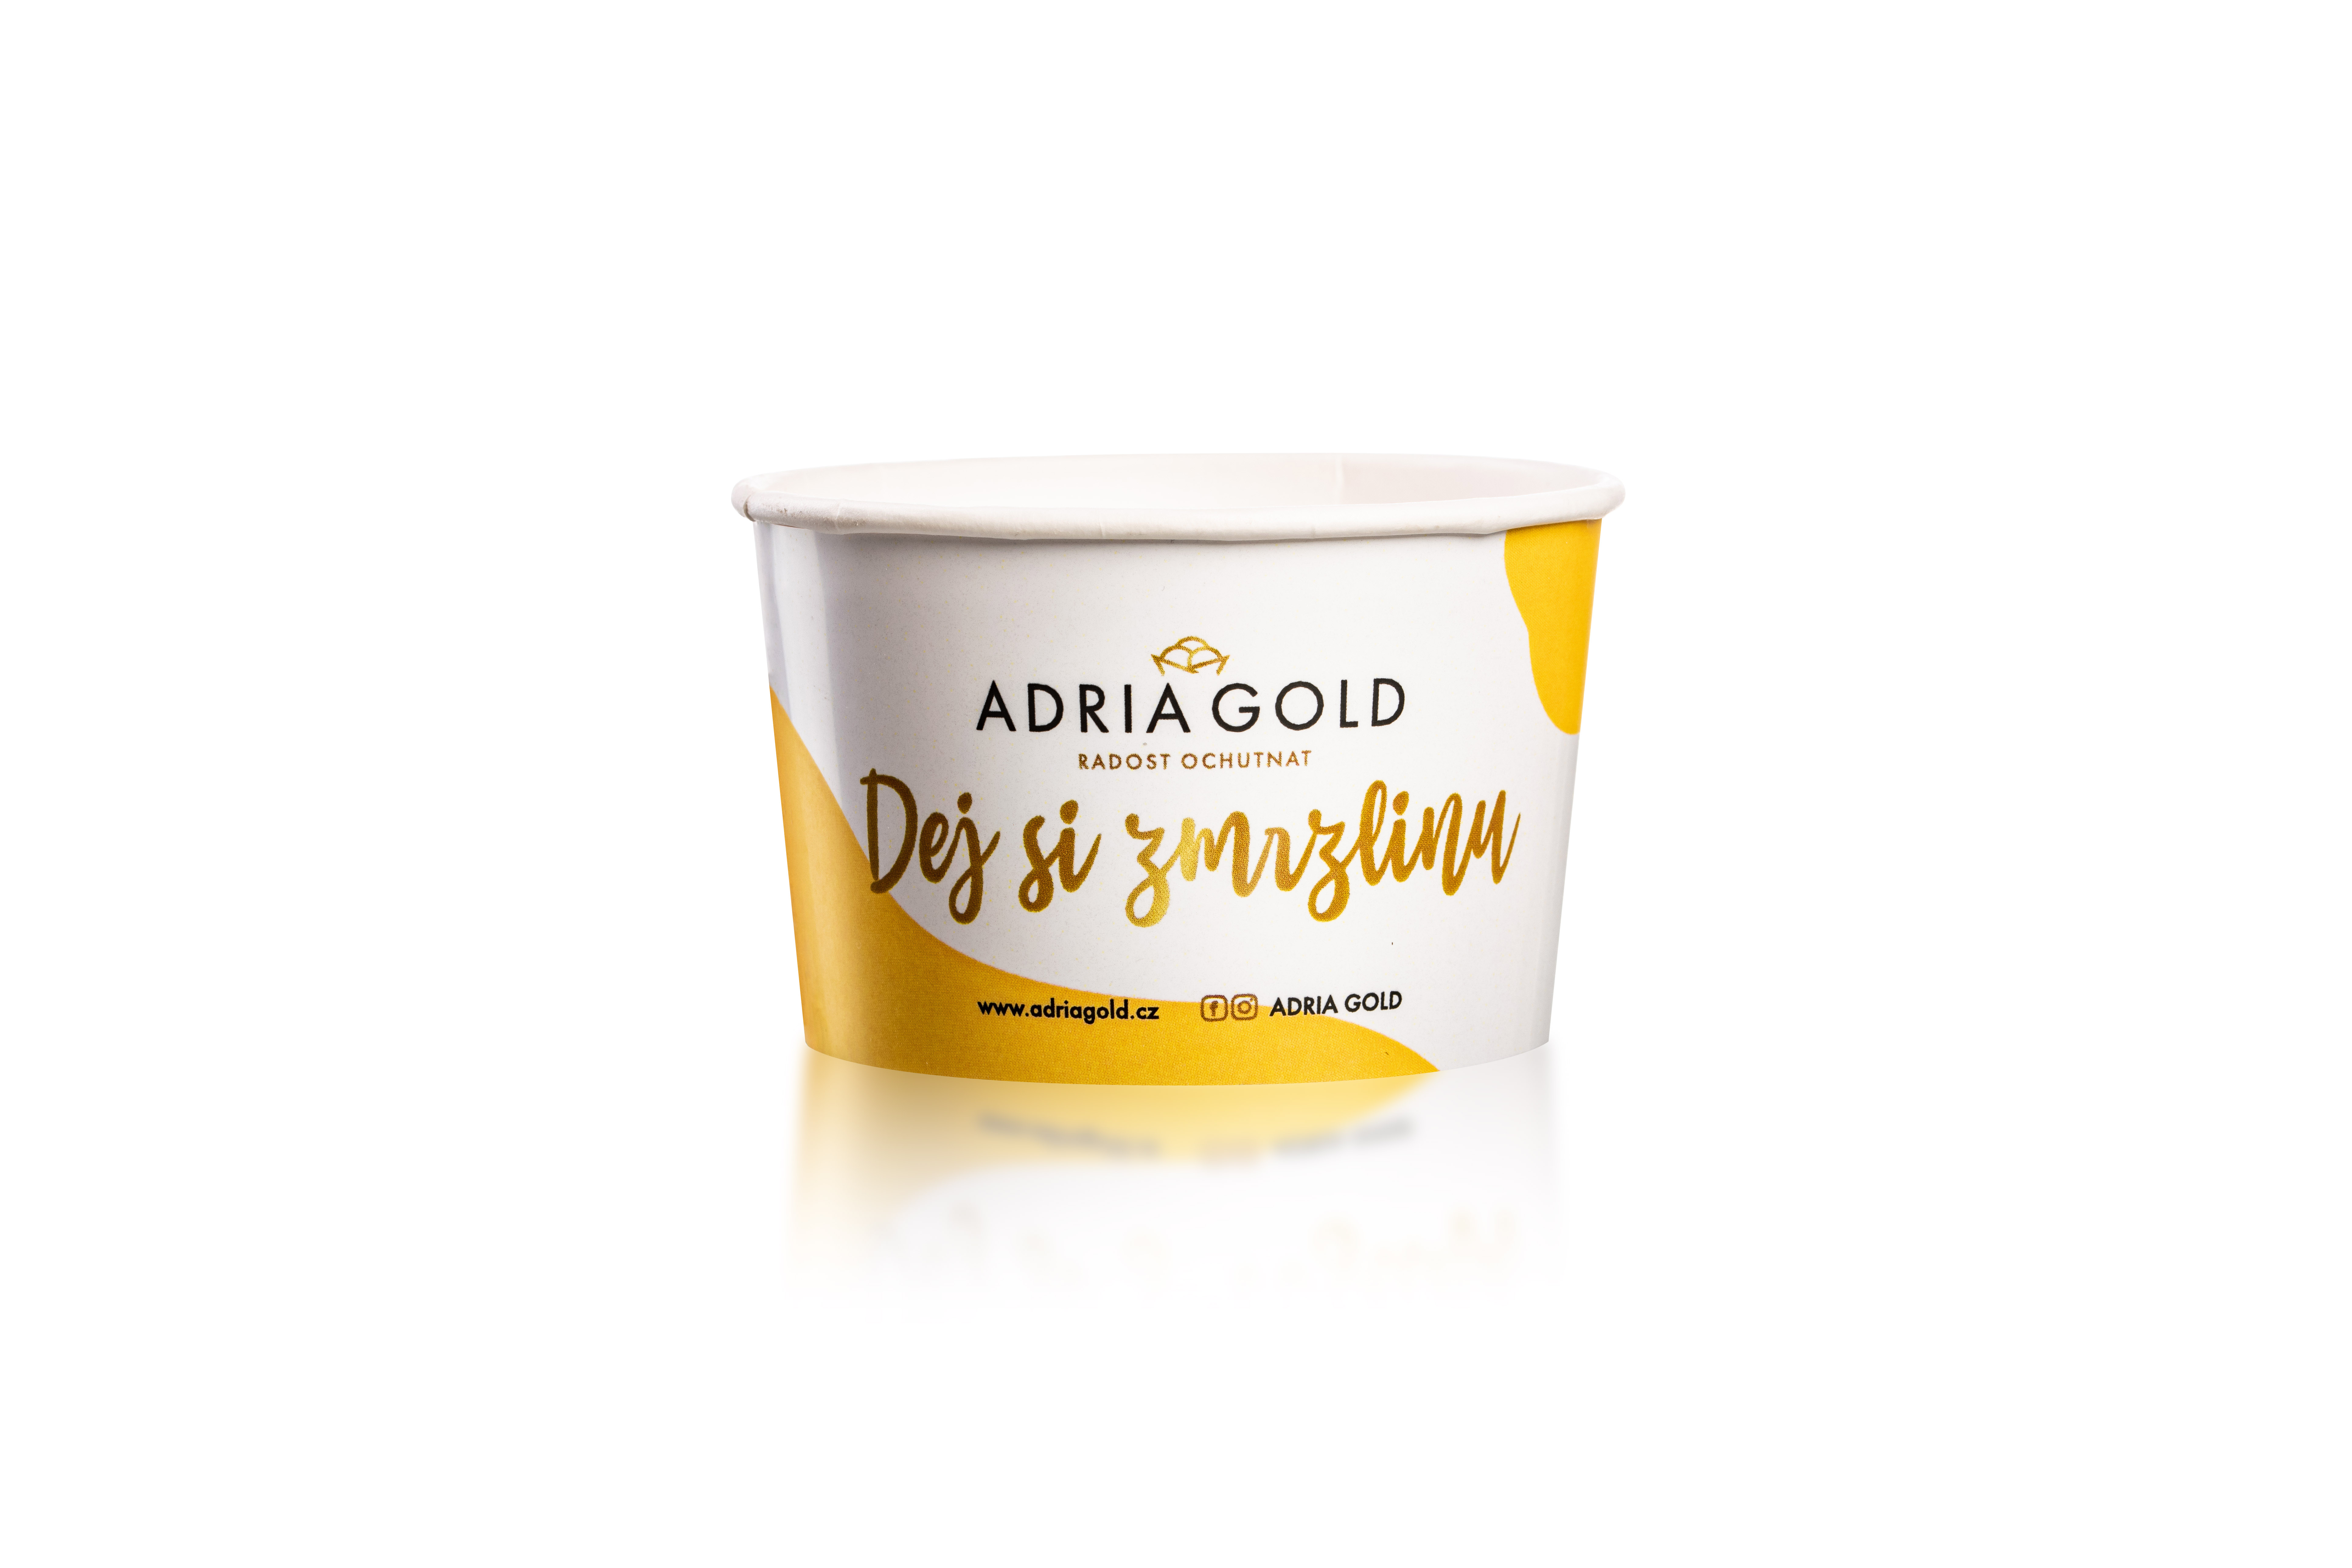 Adria Gold cup logo